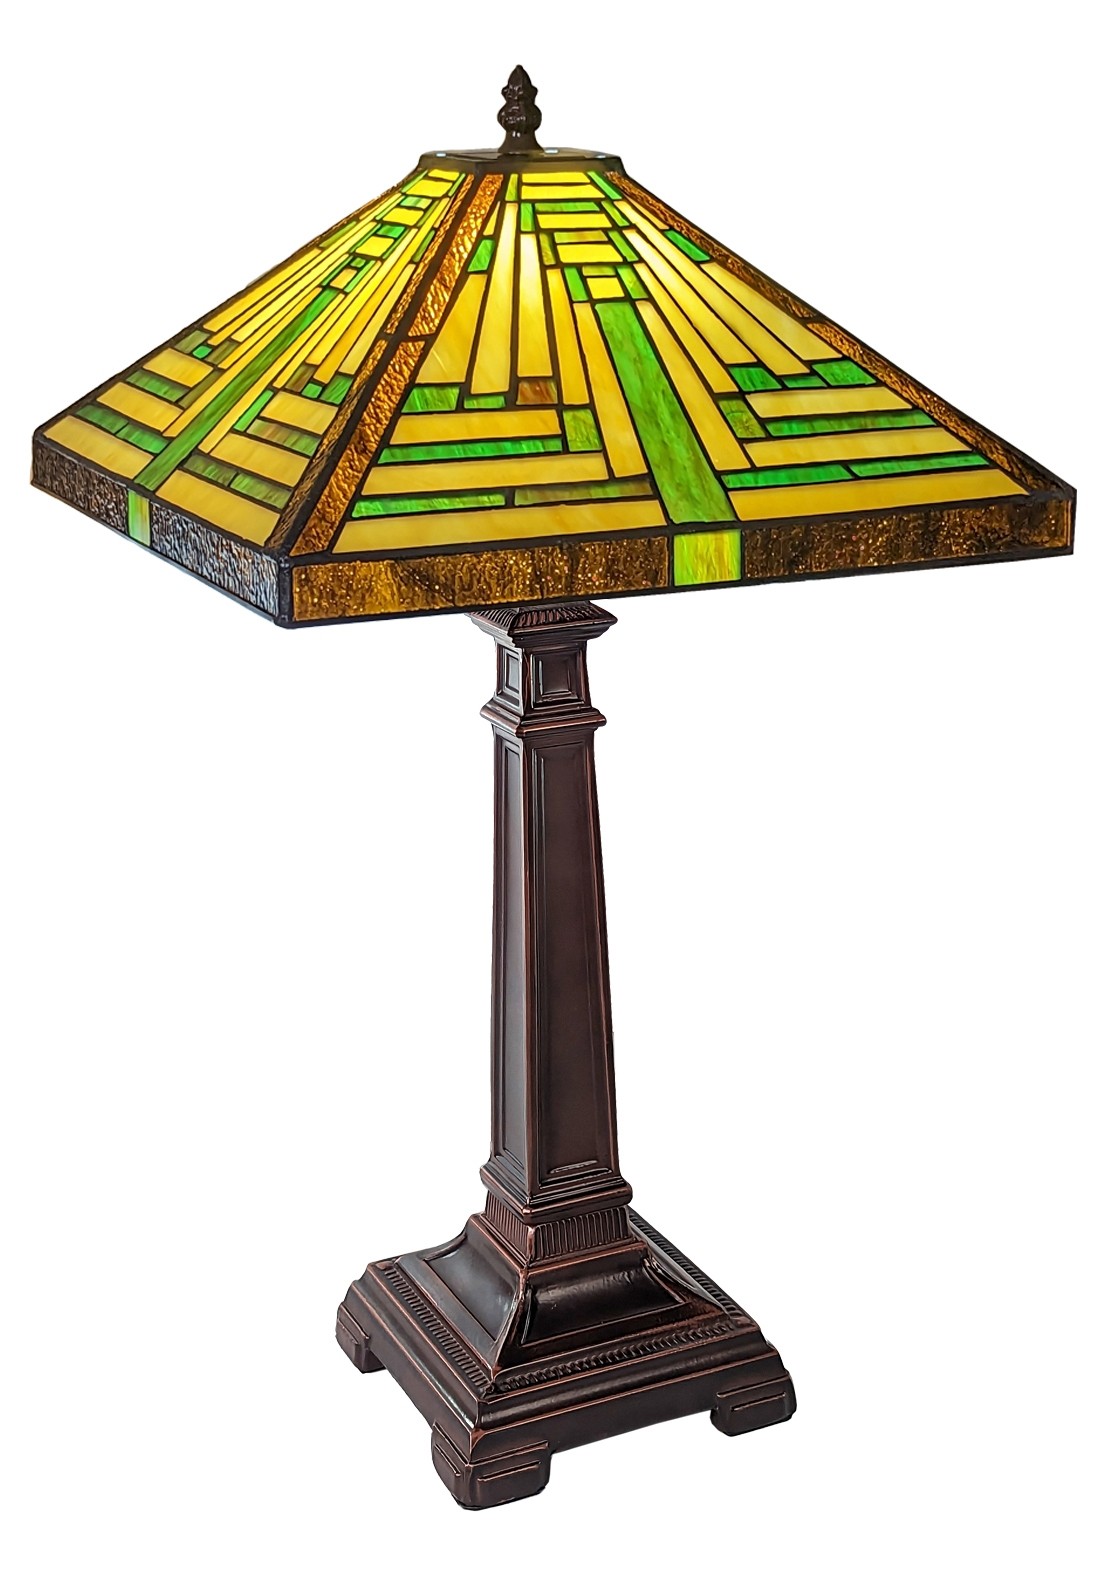 Pyramid Deco Tiffany Table Lamp - 54cm + Free Incandescent Bulb